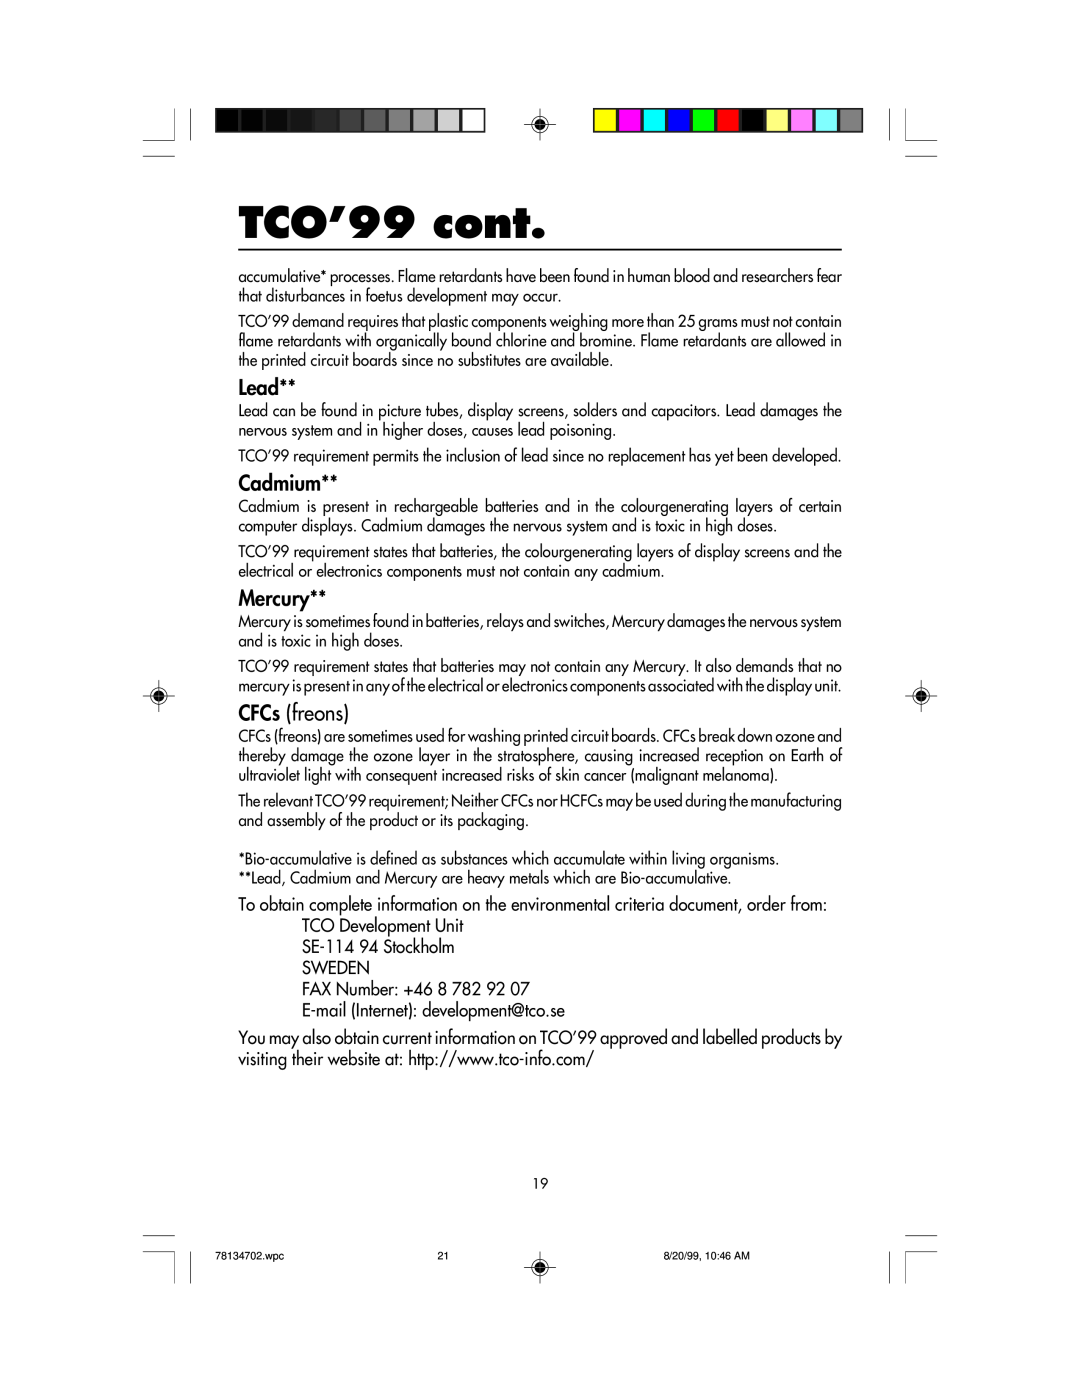 NEC LCD1510+ user manual TCO’99 cont, Lead, Cadmium, Mercury, CFCs freons 